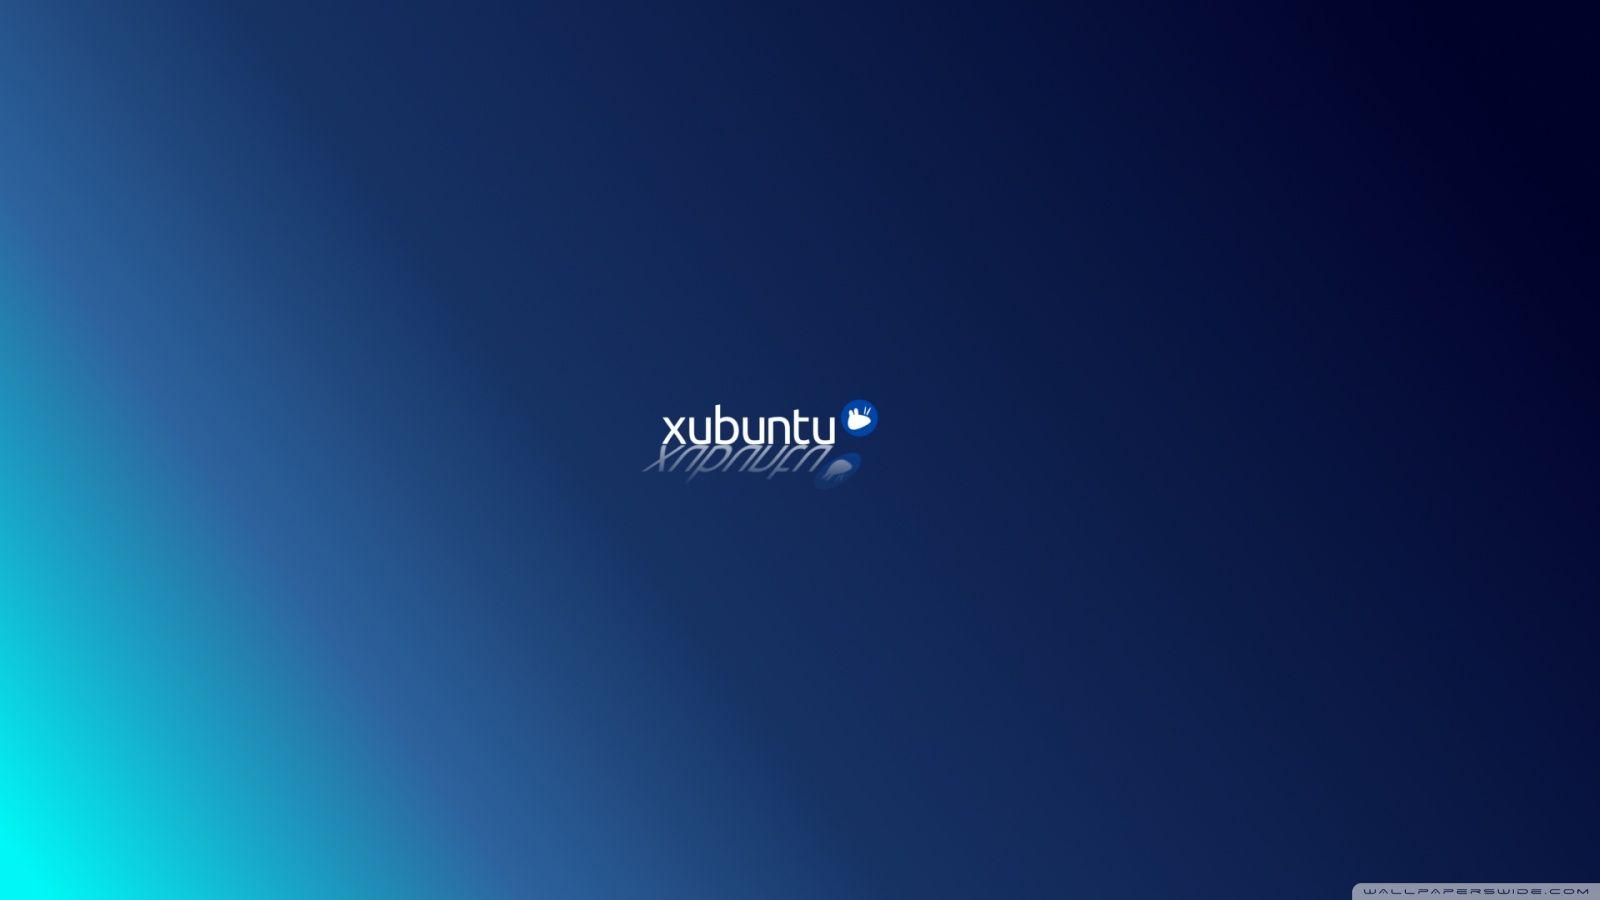 Xubuntu HD desktop wallpaper, Widescreen, High Definition